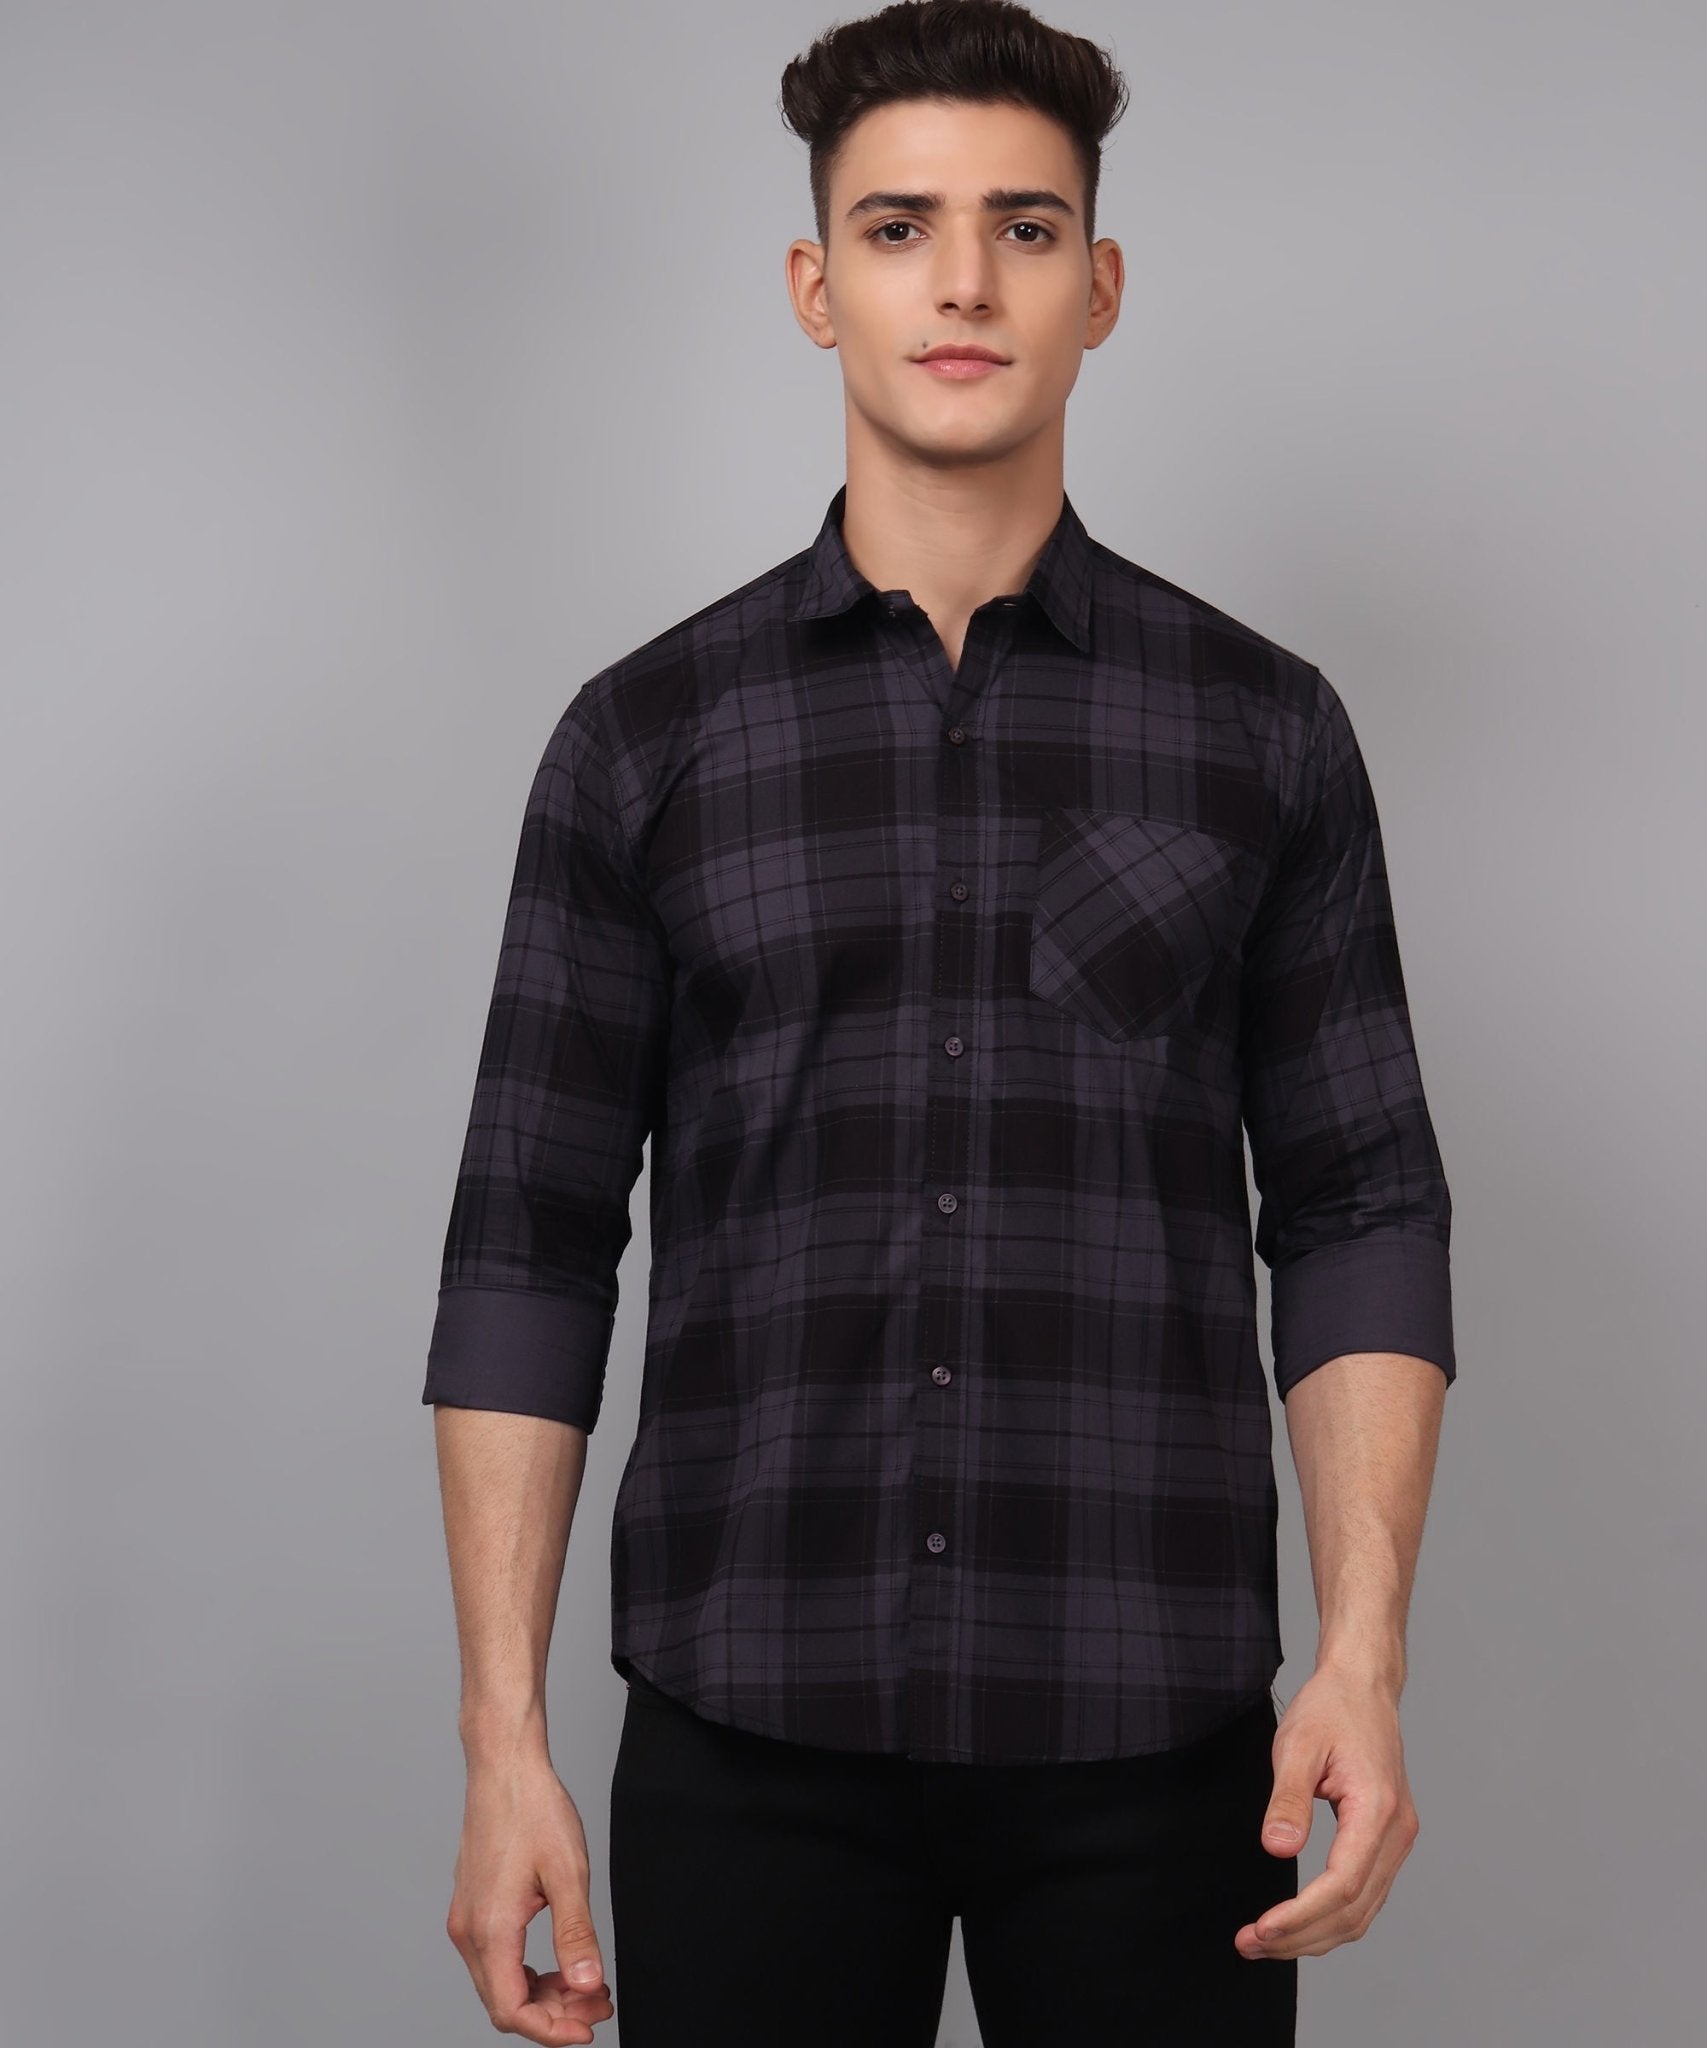 TryBuy Premium Grey Black Checks Cotton Casual Shirt for Men - TryBuy® USA🇺🇸